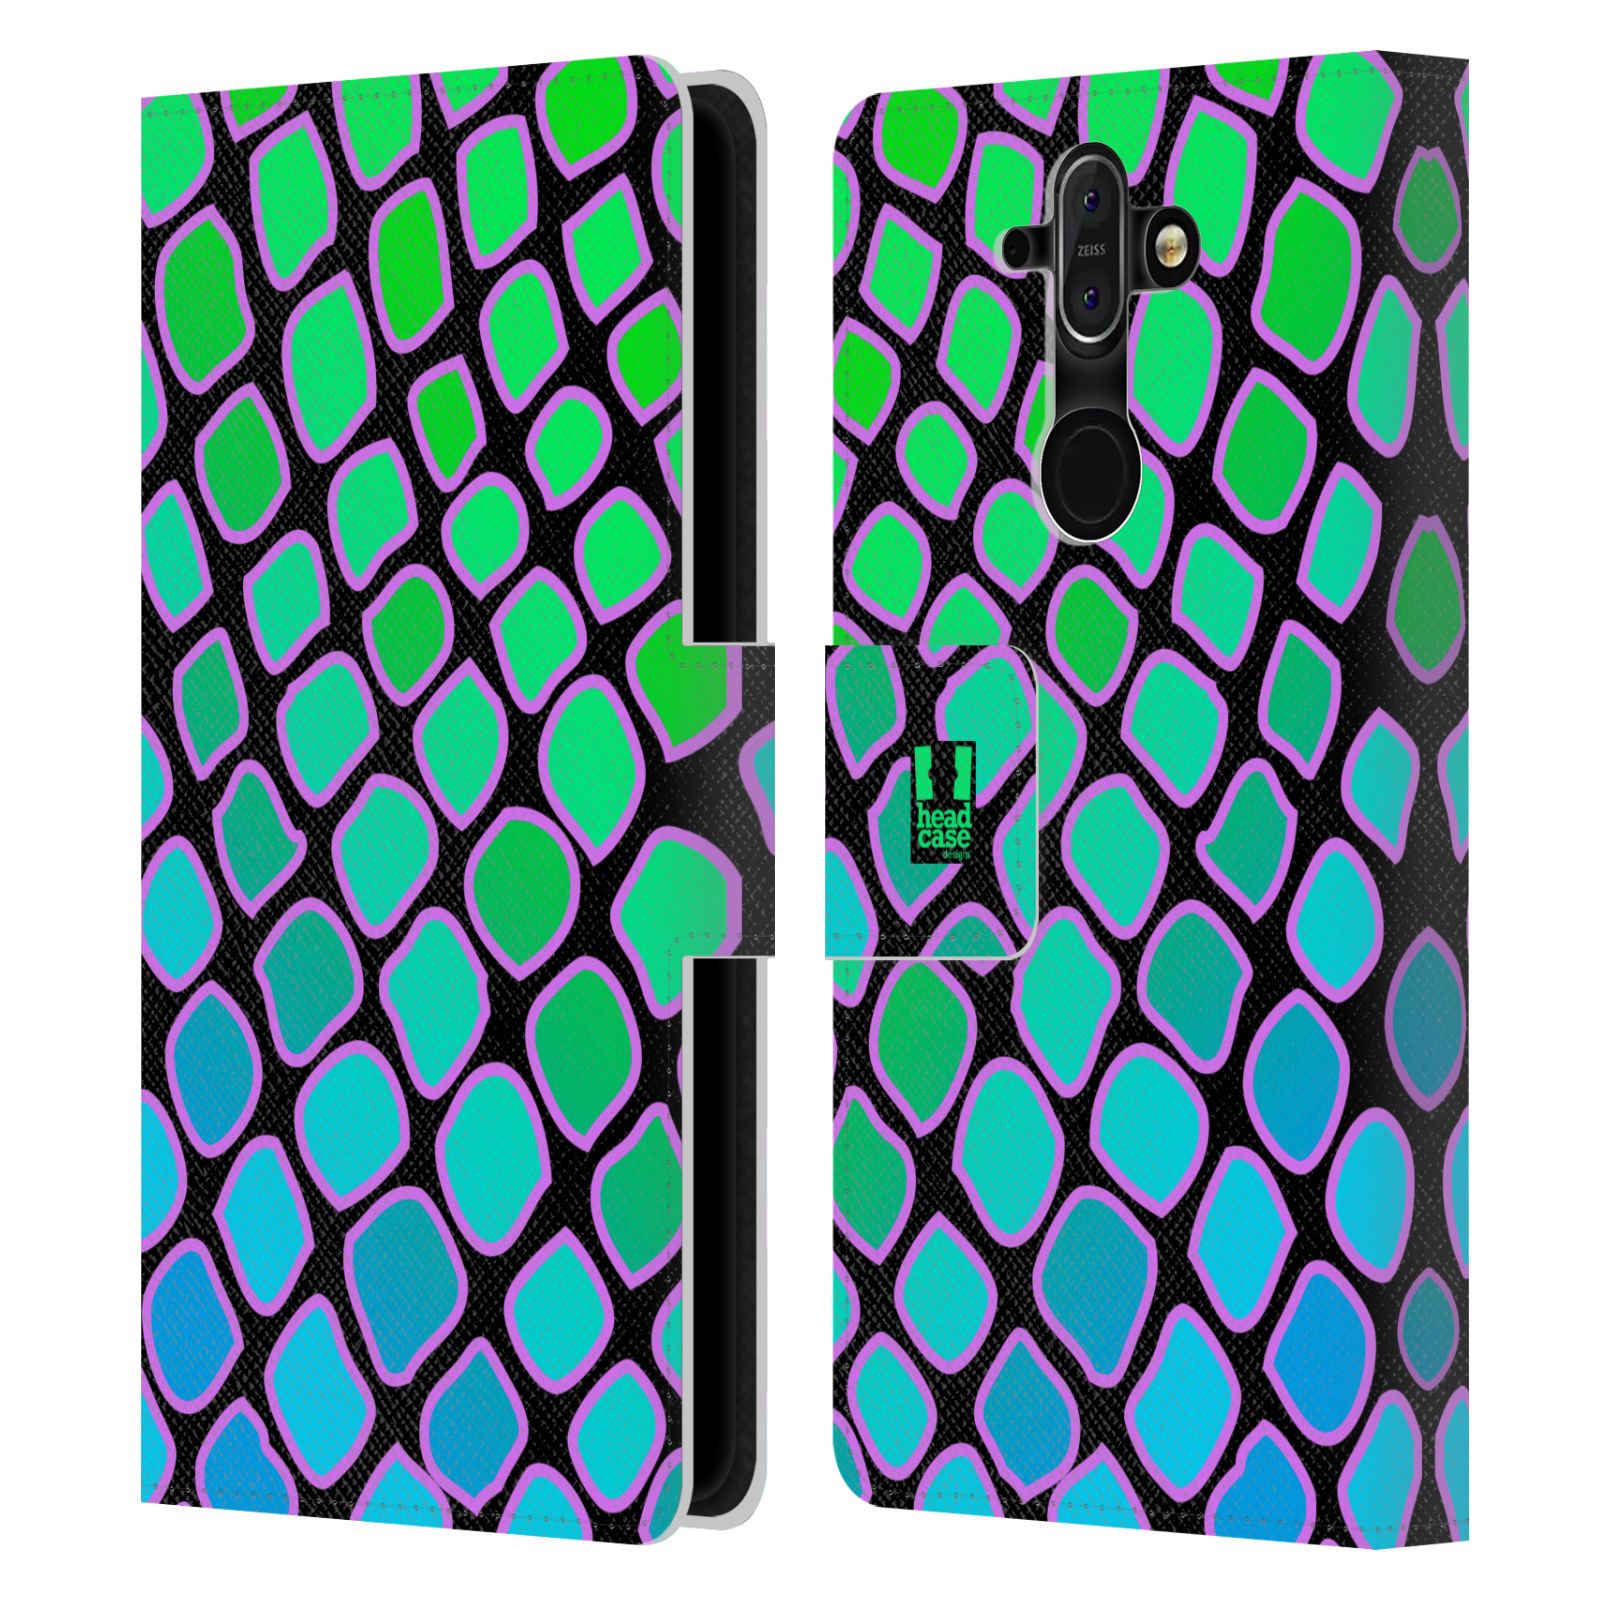 HEAD CASE Flipové pouzdro pro mobil Nokia 8 SIROCCO Zvířecí barevné vzory vodní had modrá a zelená barva AQUA